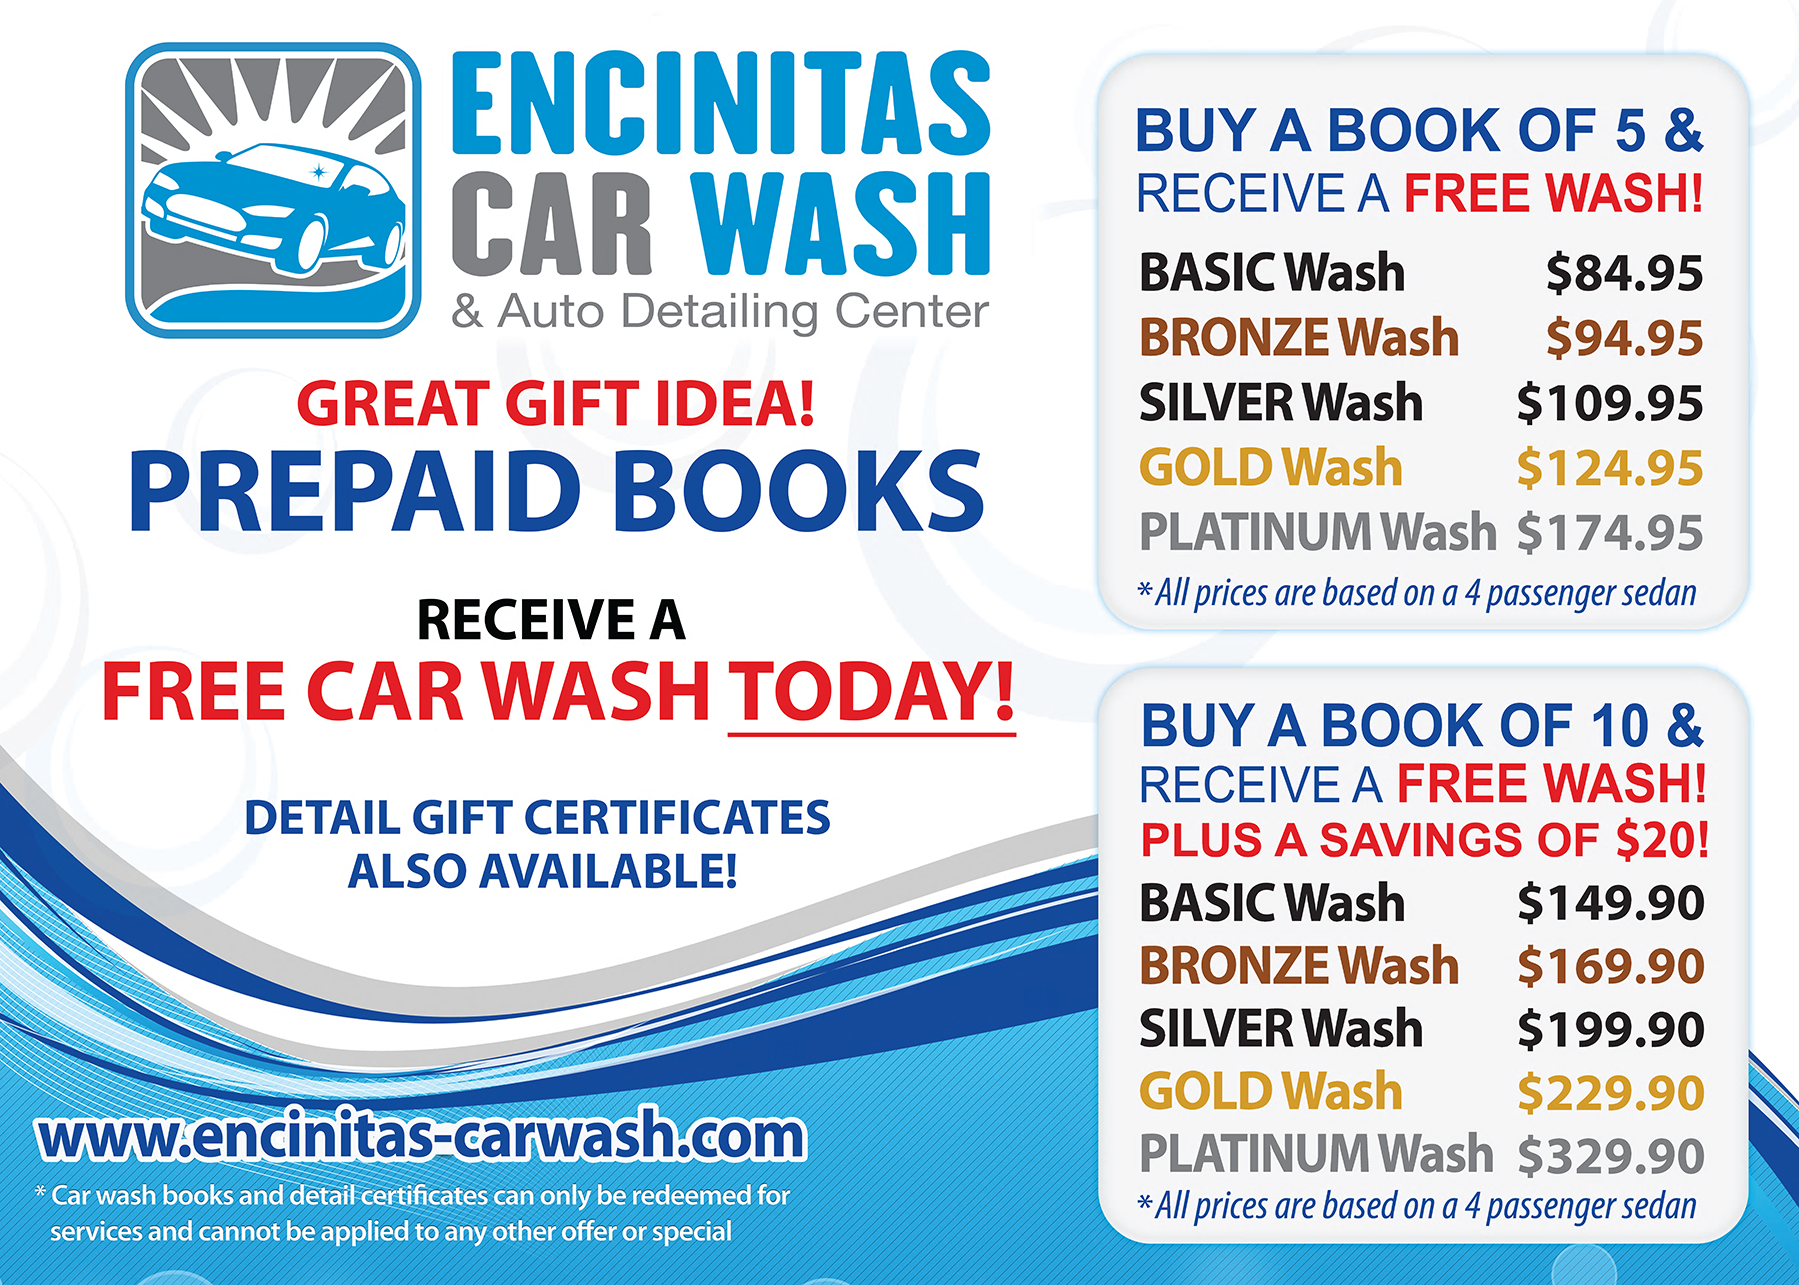 Loyalty Club Encinitas Car Wash